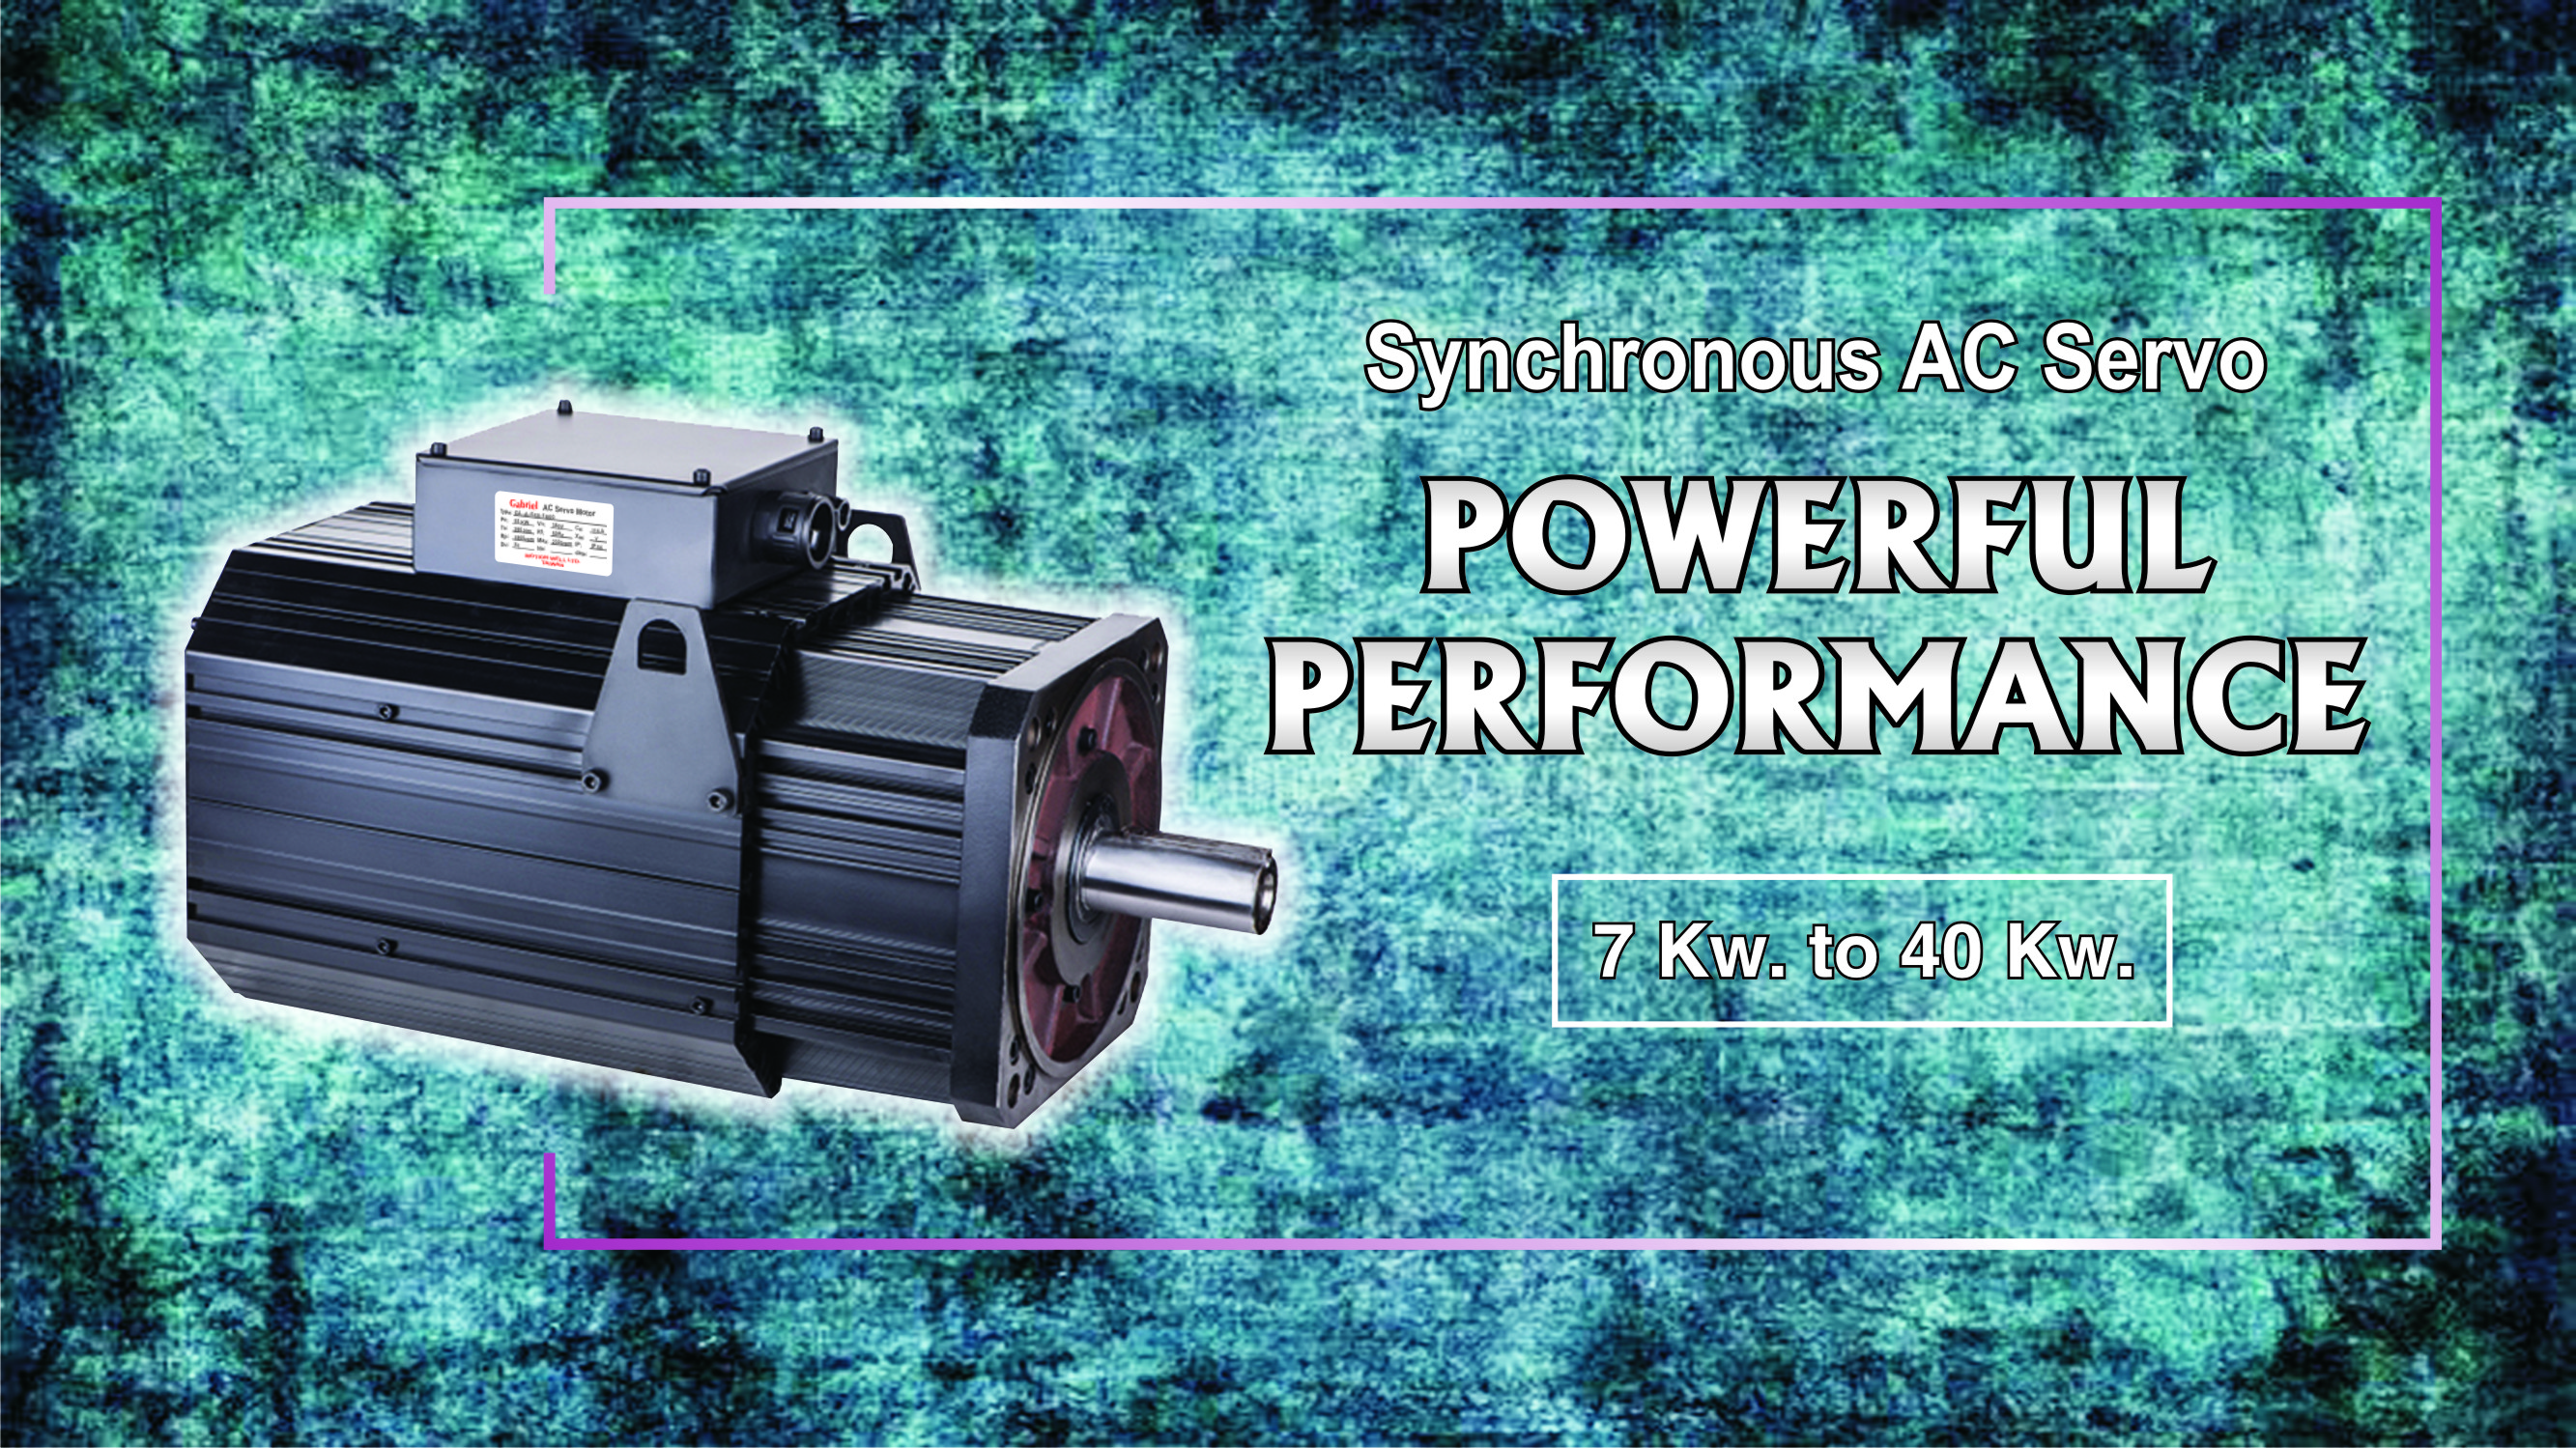 Synchronous AC Servo High-Performance wiht 7 kw. to 40 kw 